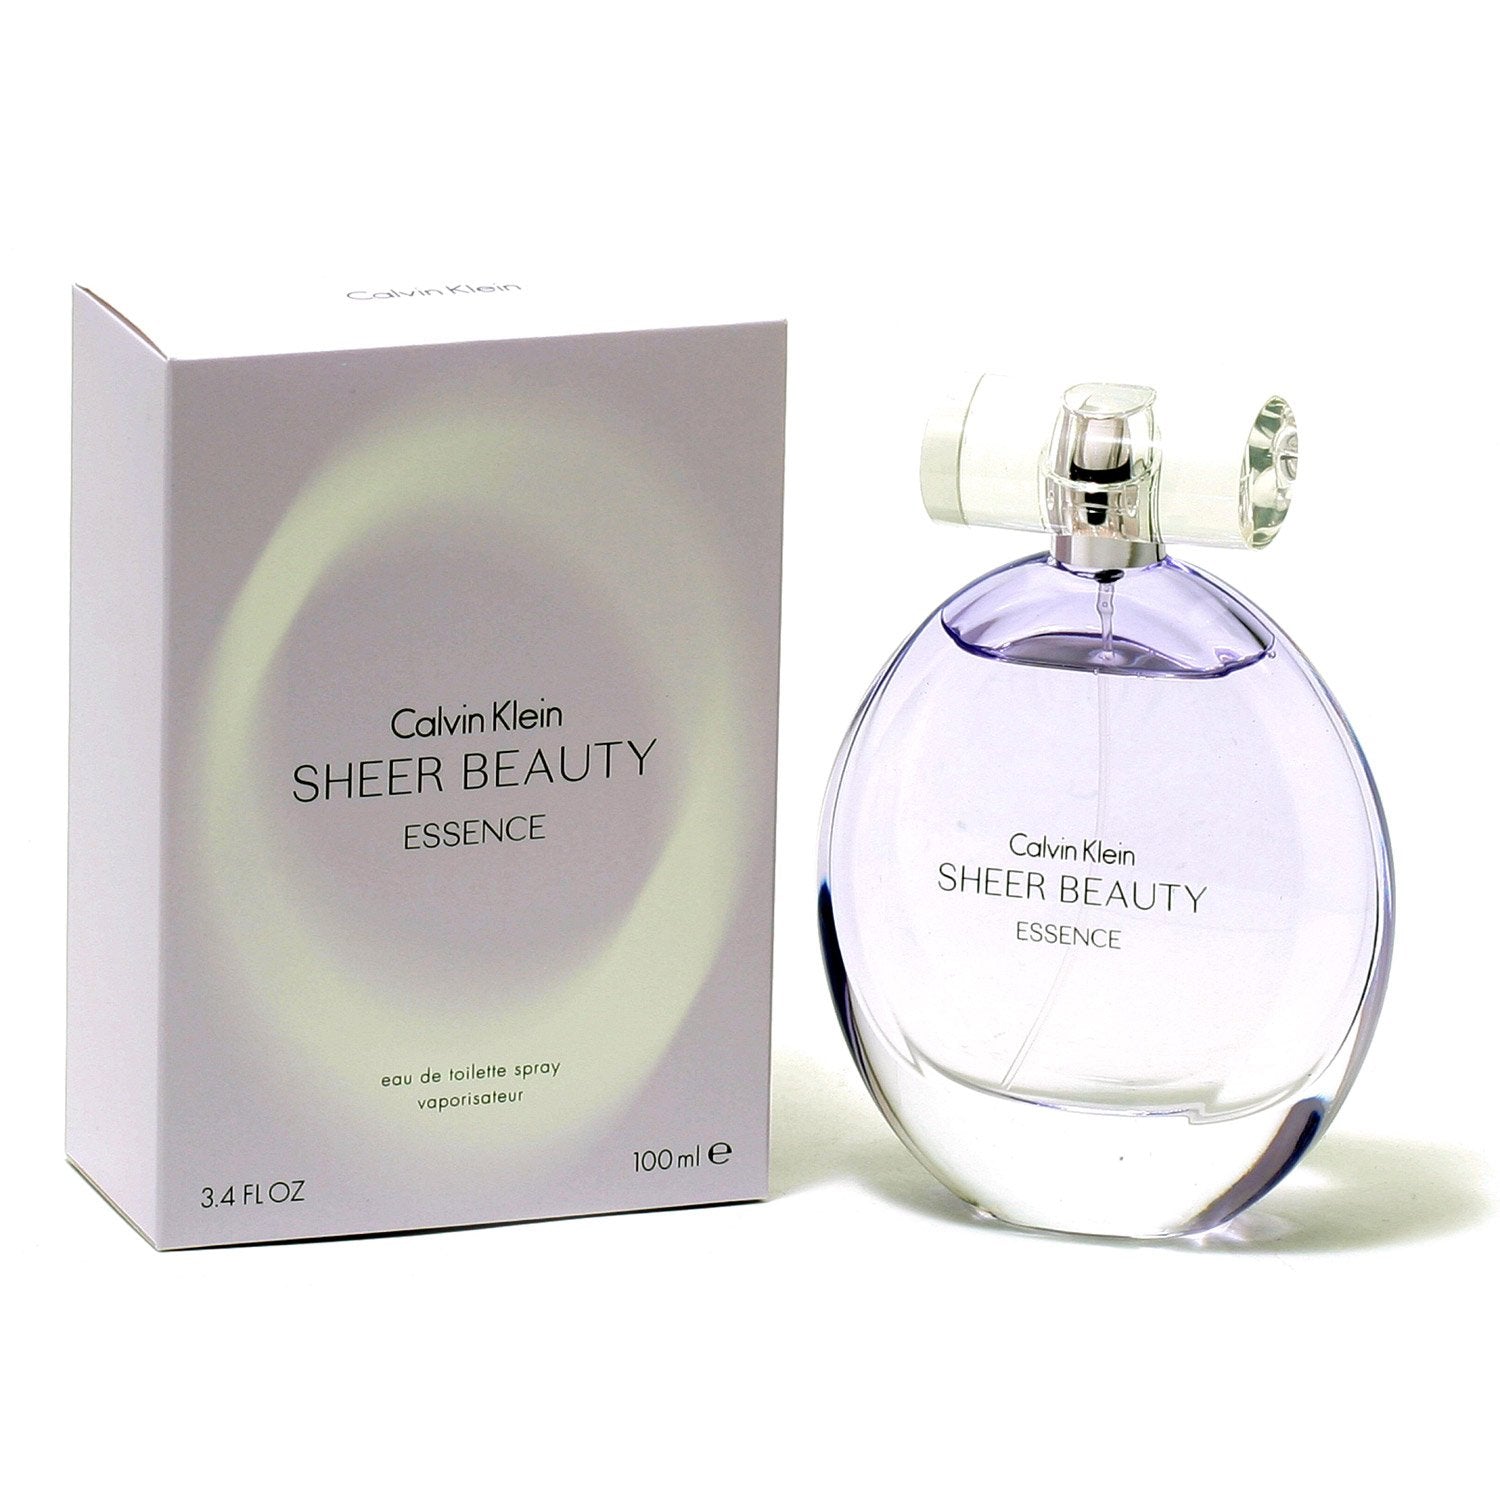 Perfume for Women - LOVE 5 PARIS – Shine-Perfume